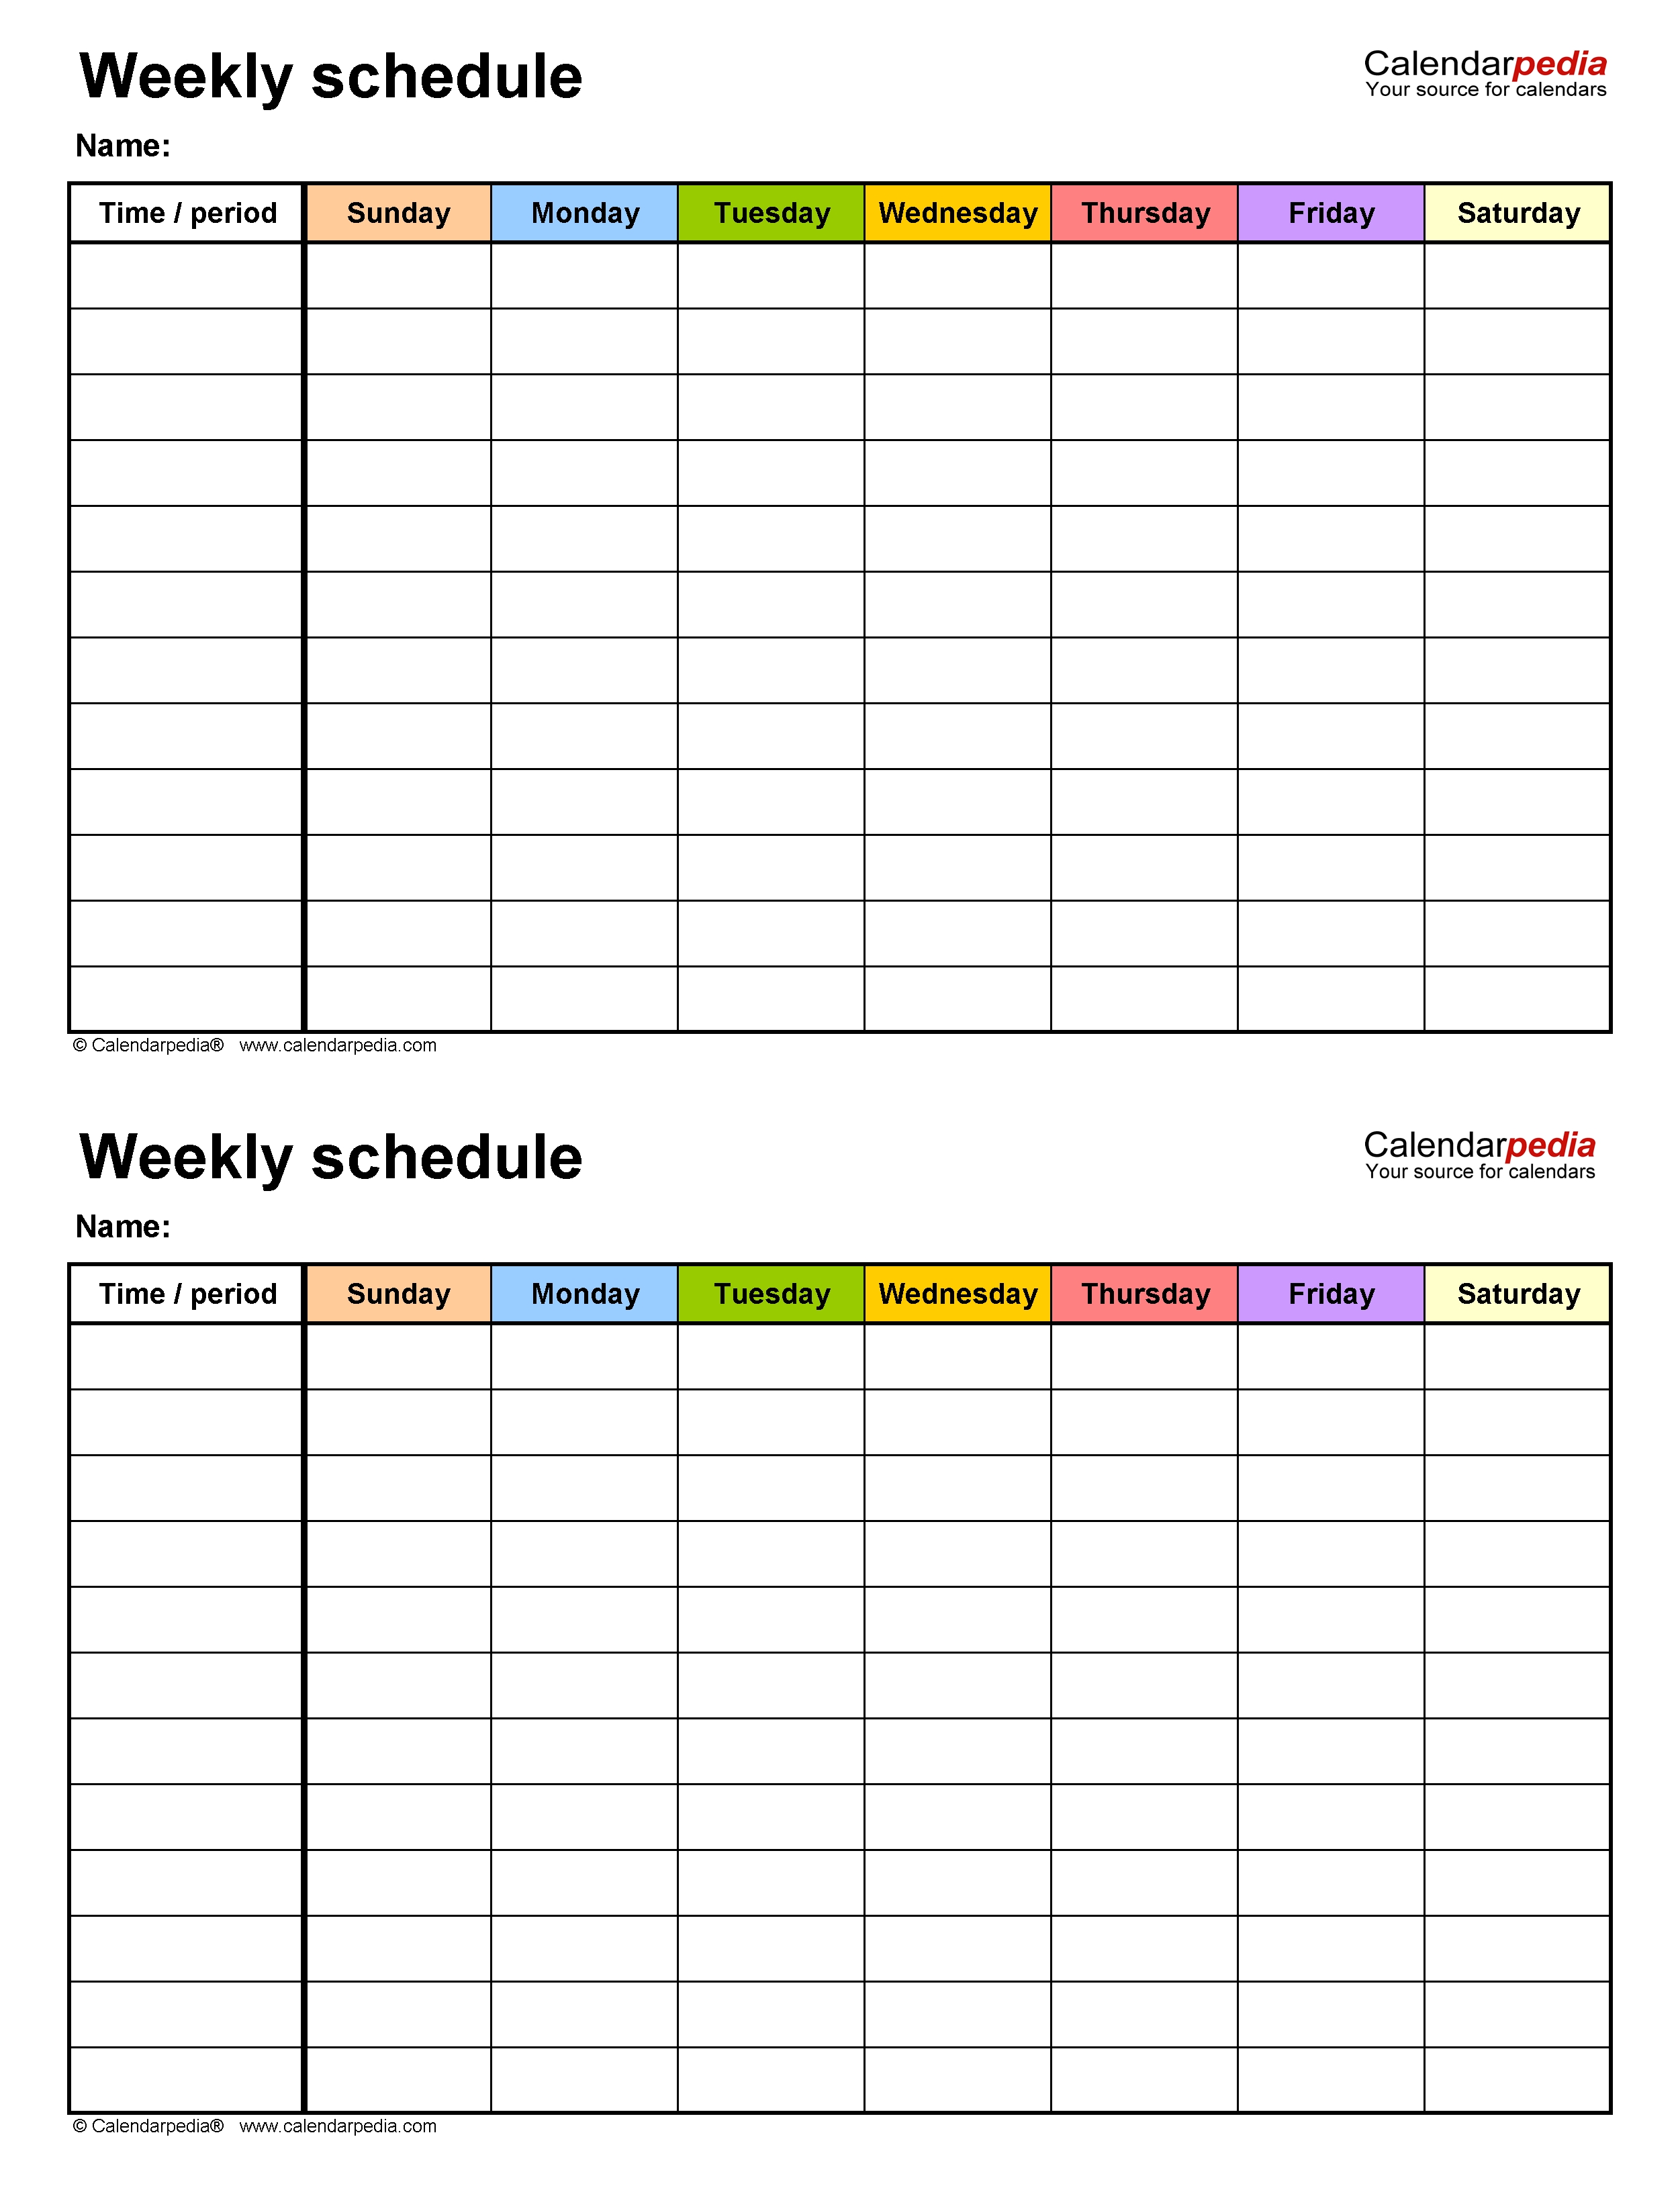 Free Weekly Schedule Templates For Word - 18 Templates Calendar Template Work Week